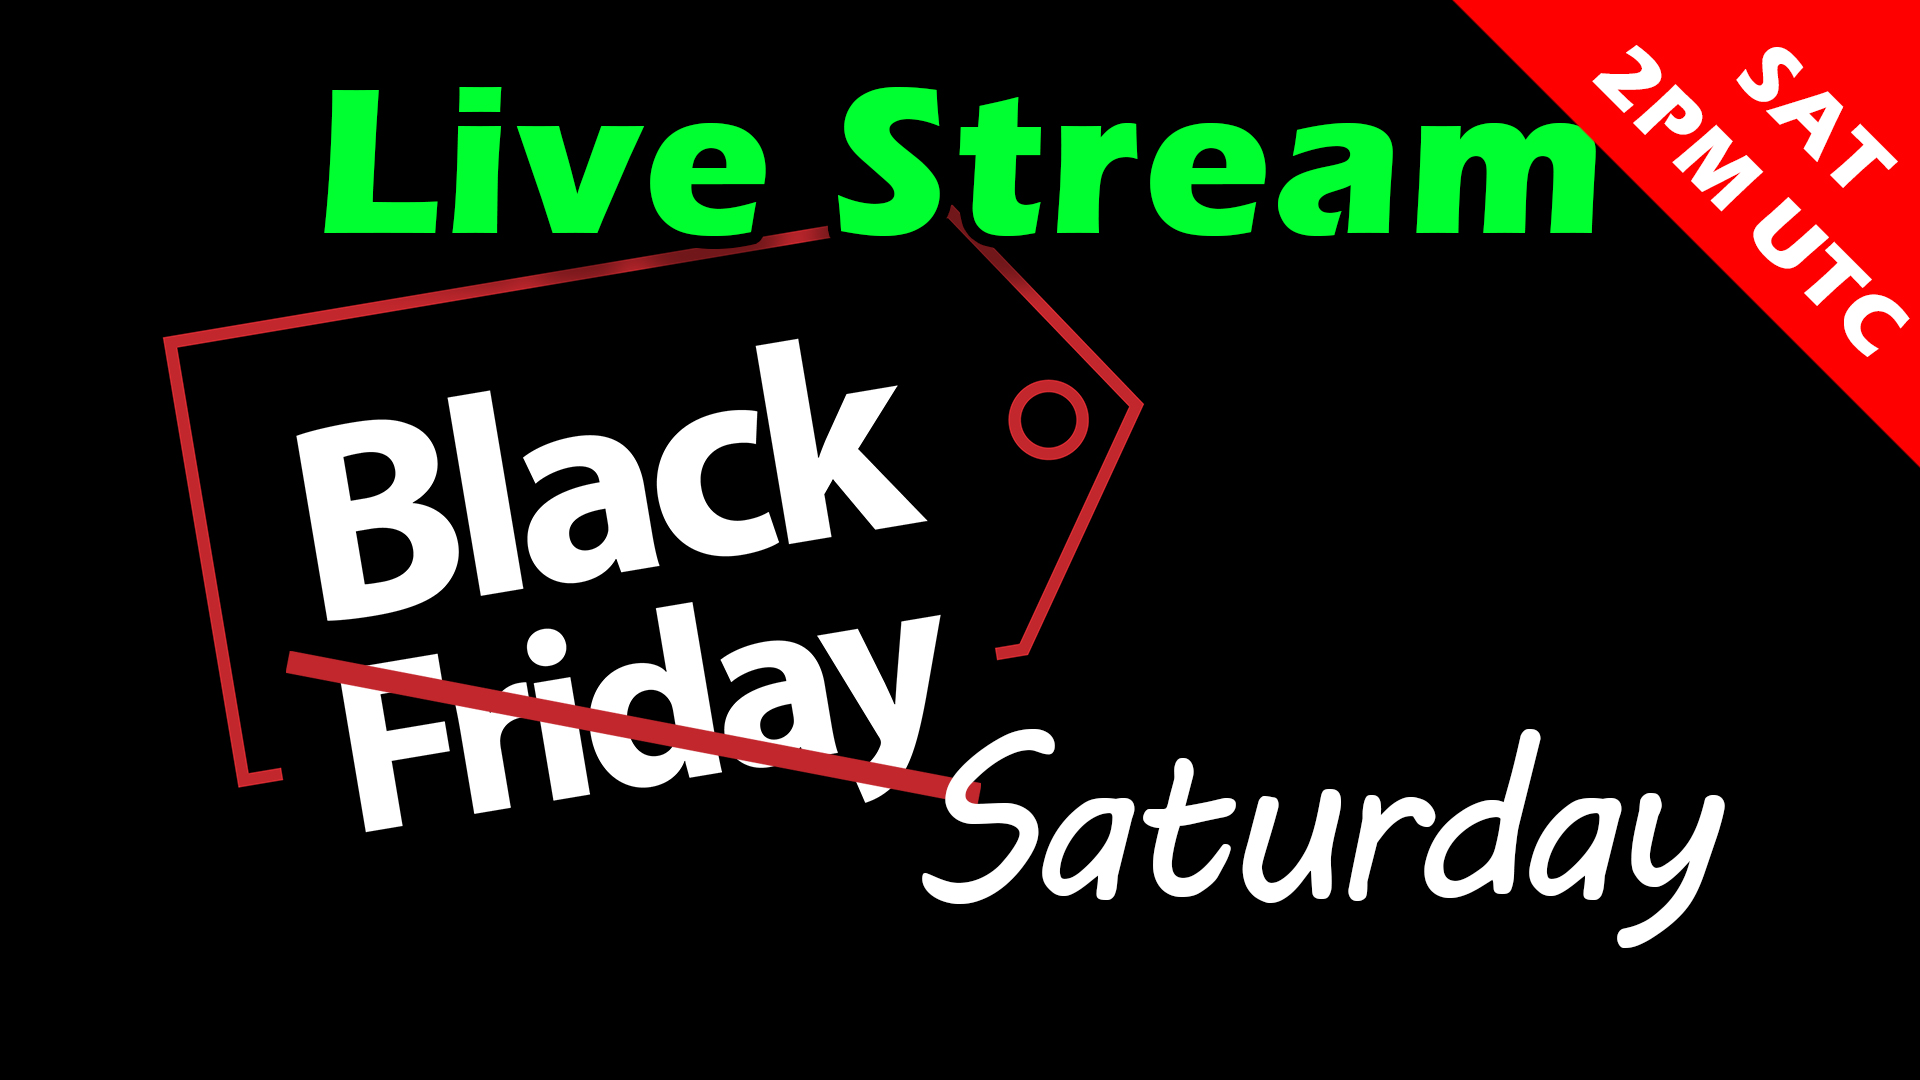 Live Stream Black Friday Deals ranzee